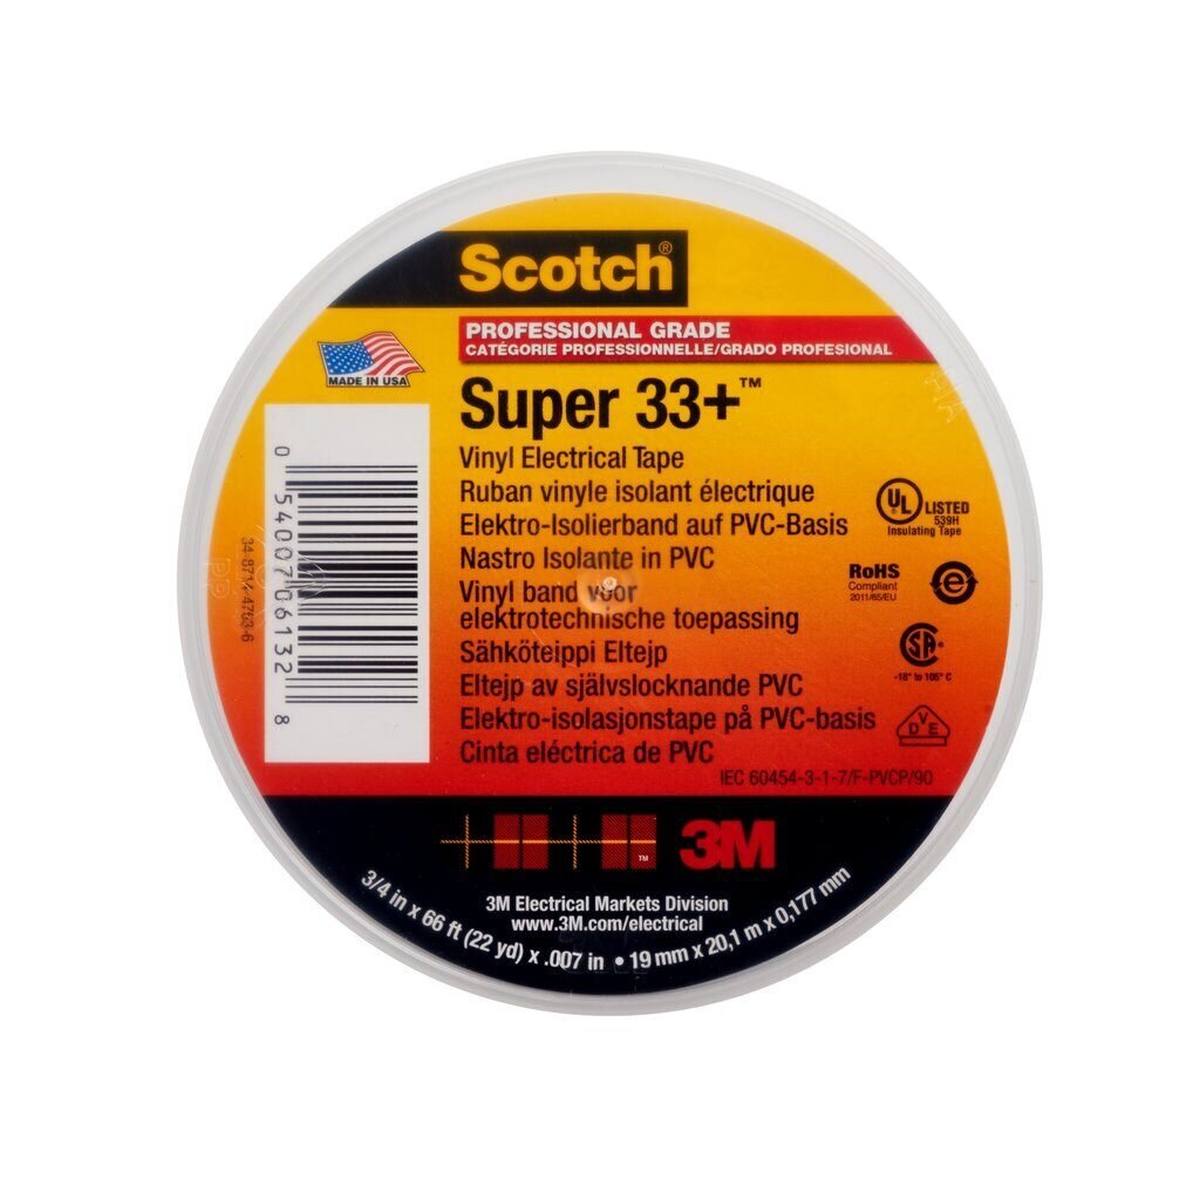  3M Scotch Super 33+ vinyylinen sähköeristysteippi, musta, 19 mm x 20 m, 0,18 mm